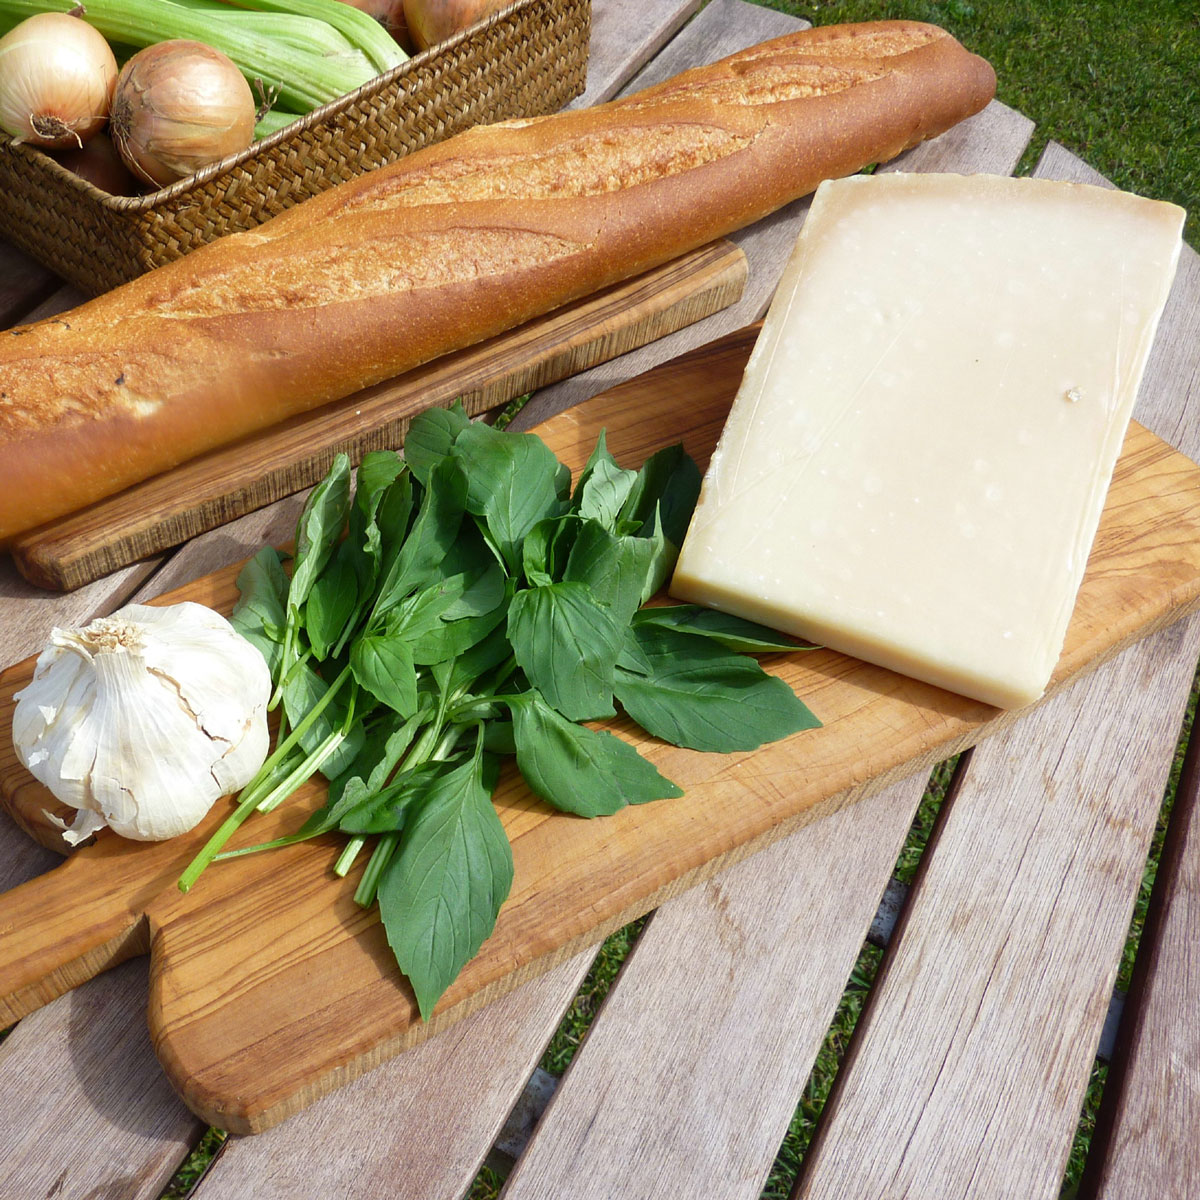 Ingredients for the Italian seasoned breadcrumbs